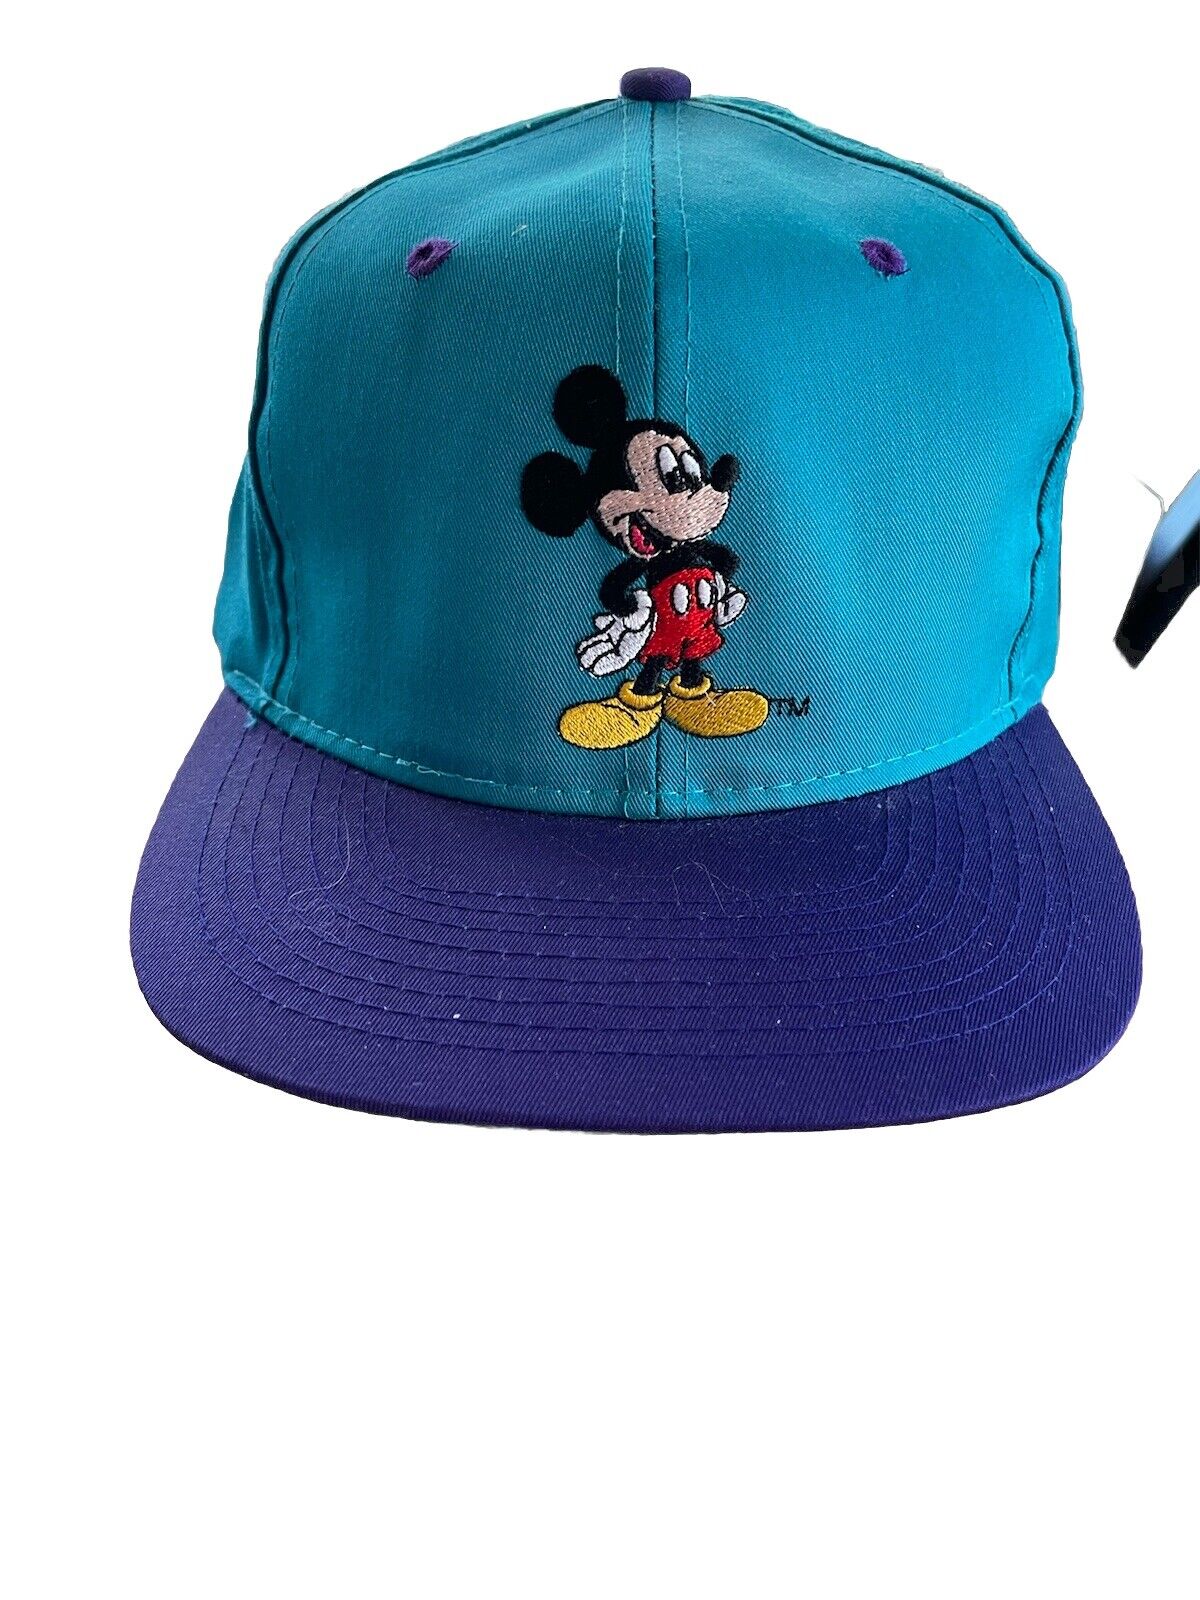 NWT Vintage Disney MickeyMouse Snapback Hat 90s Mickey Unlimited Teal Purple Cap